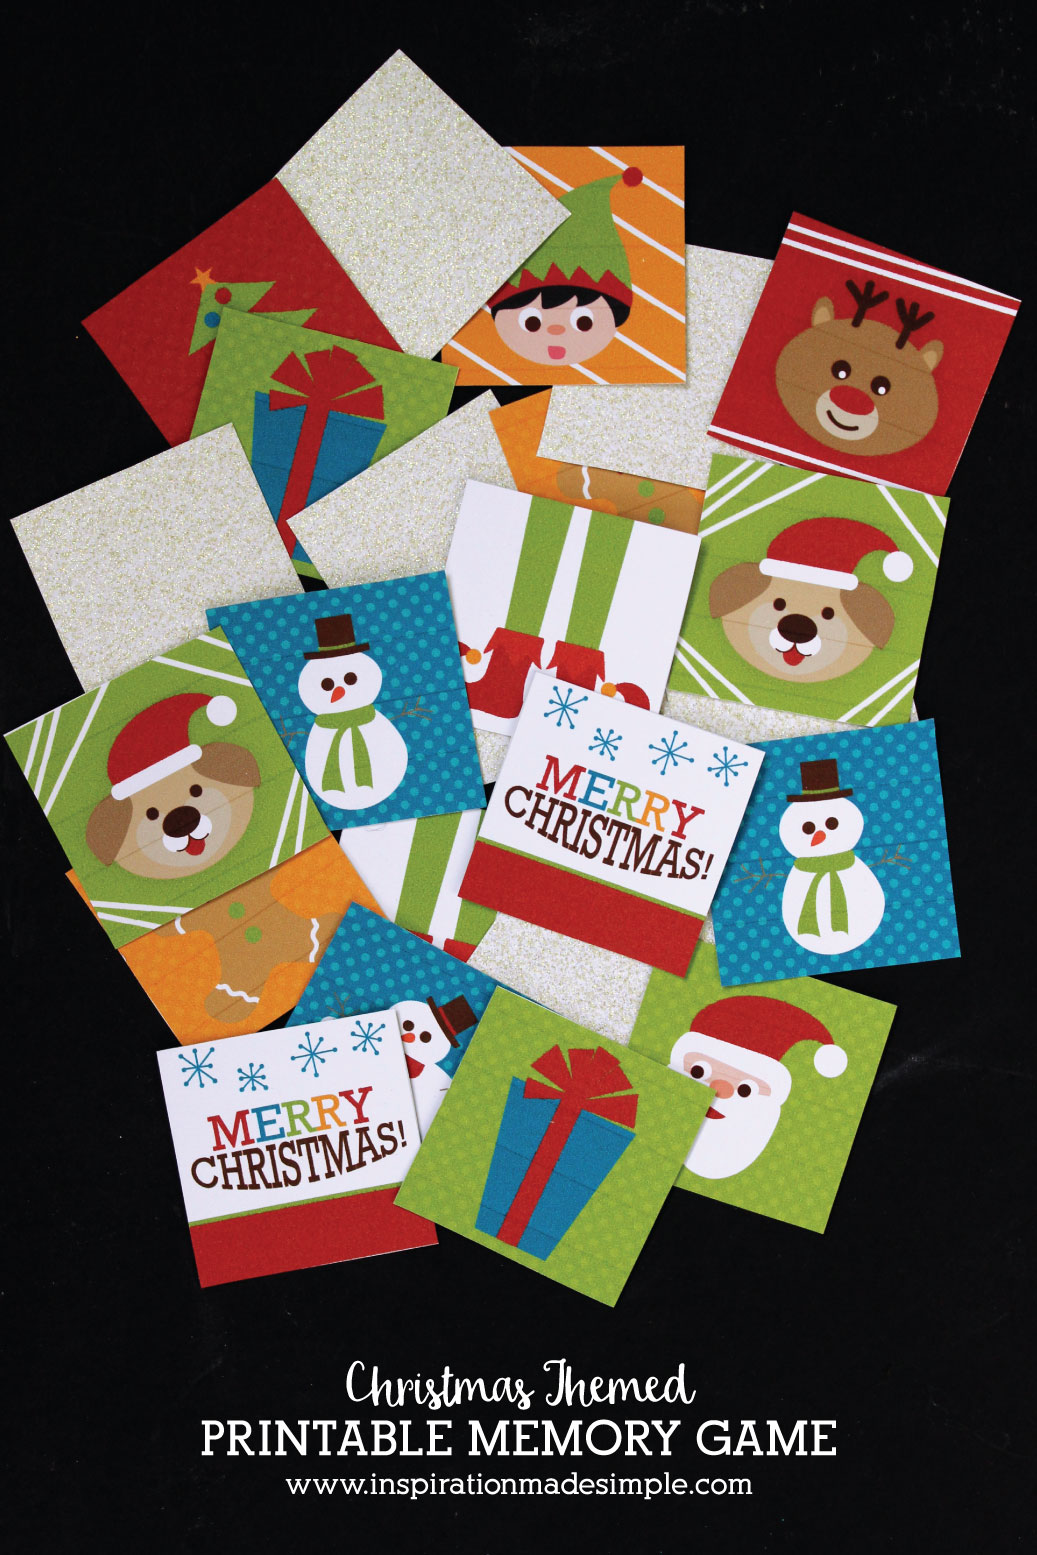 DIY Printable Christmas Memory Matching Game - fun activity for kids!